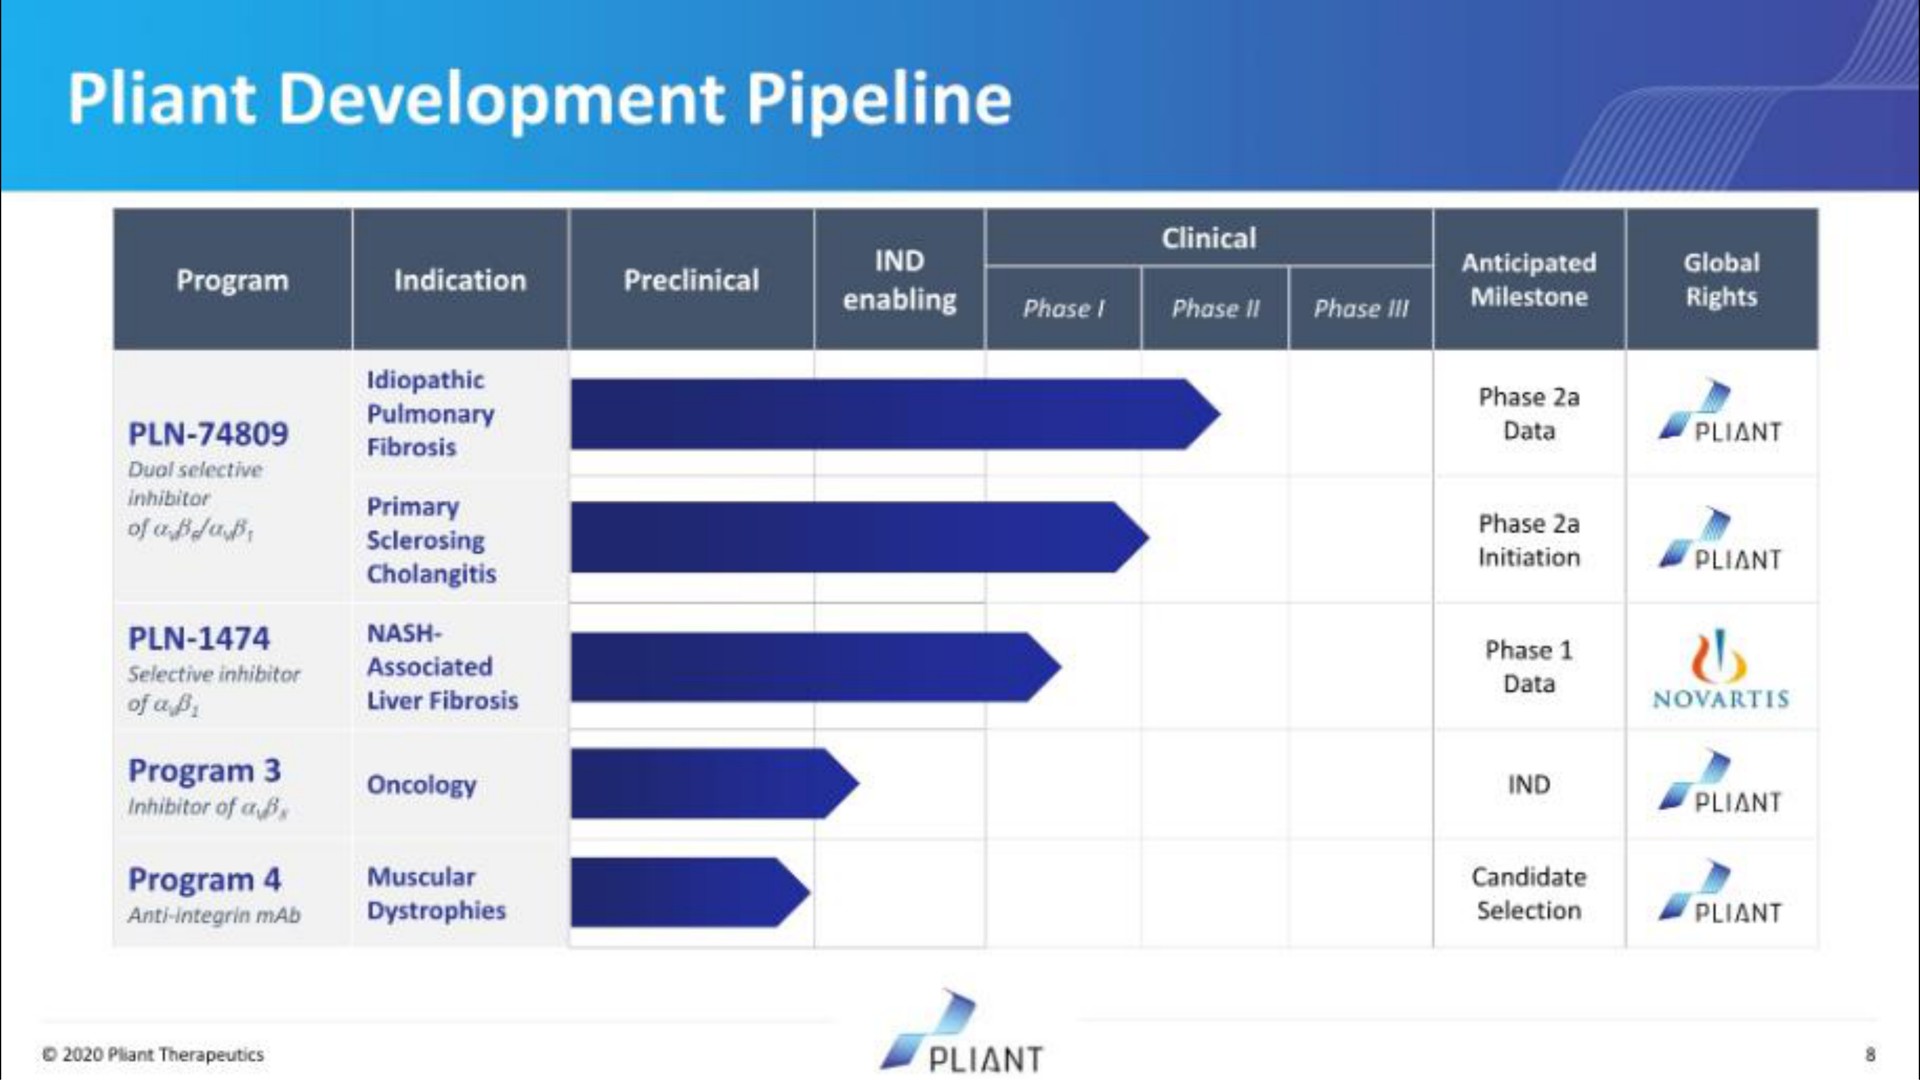 pliant development pipeline | Pilant Therapeutics